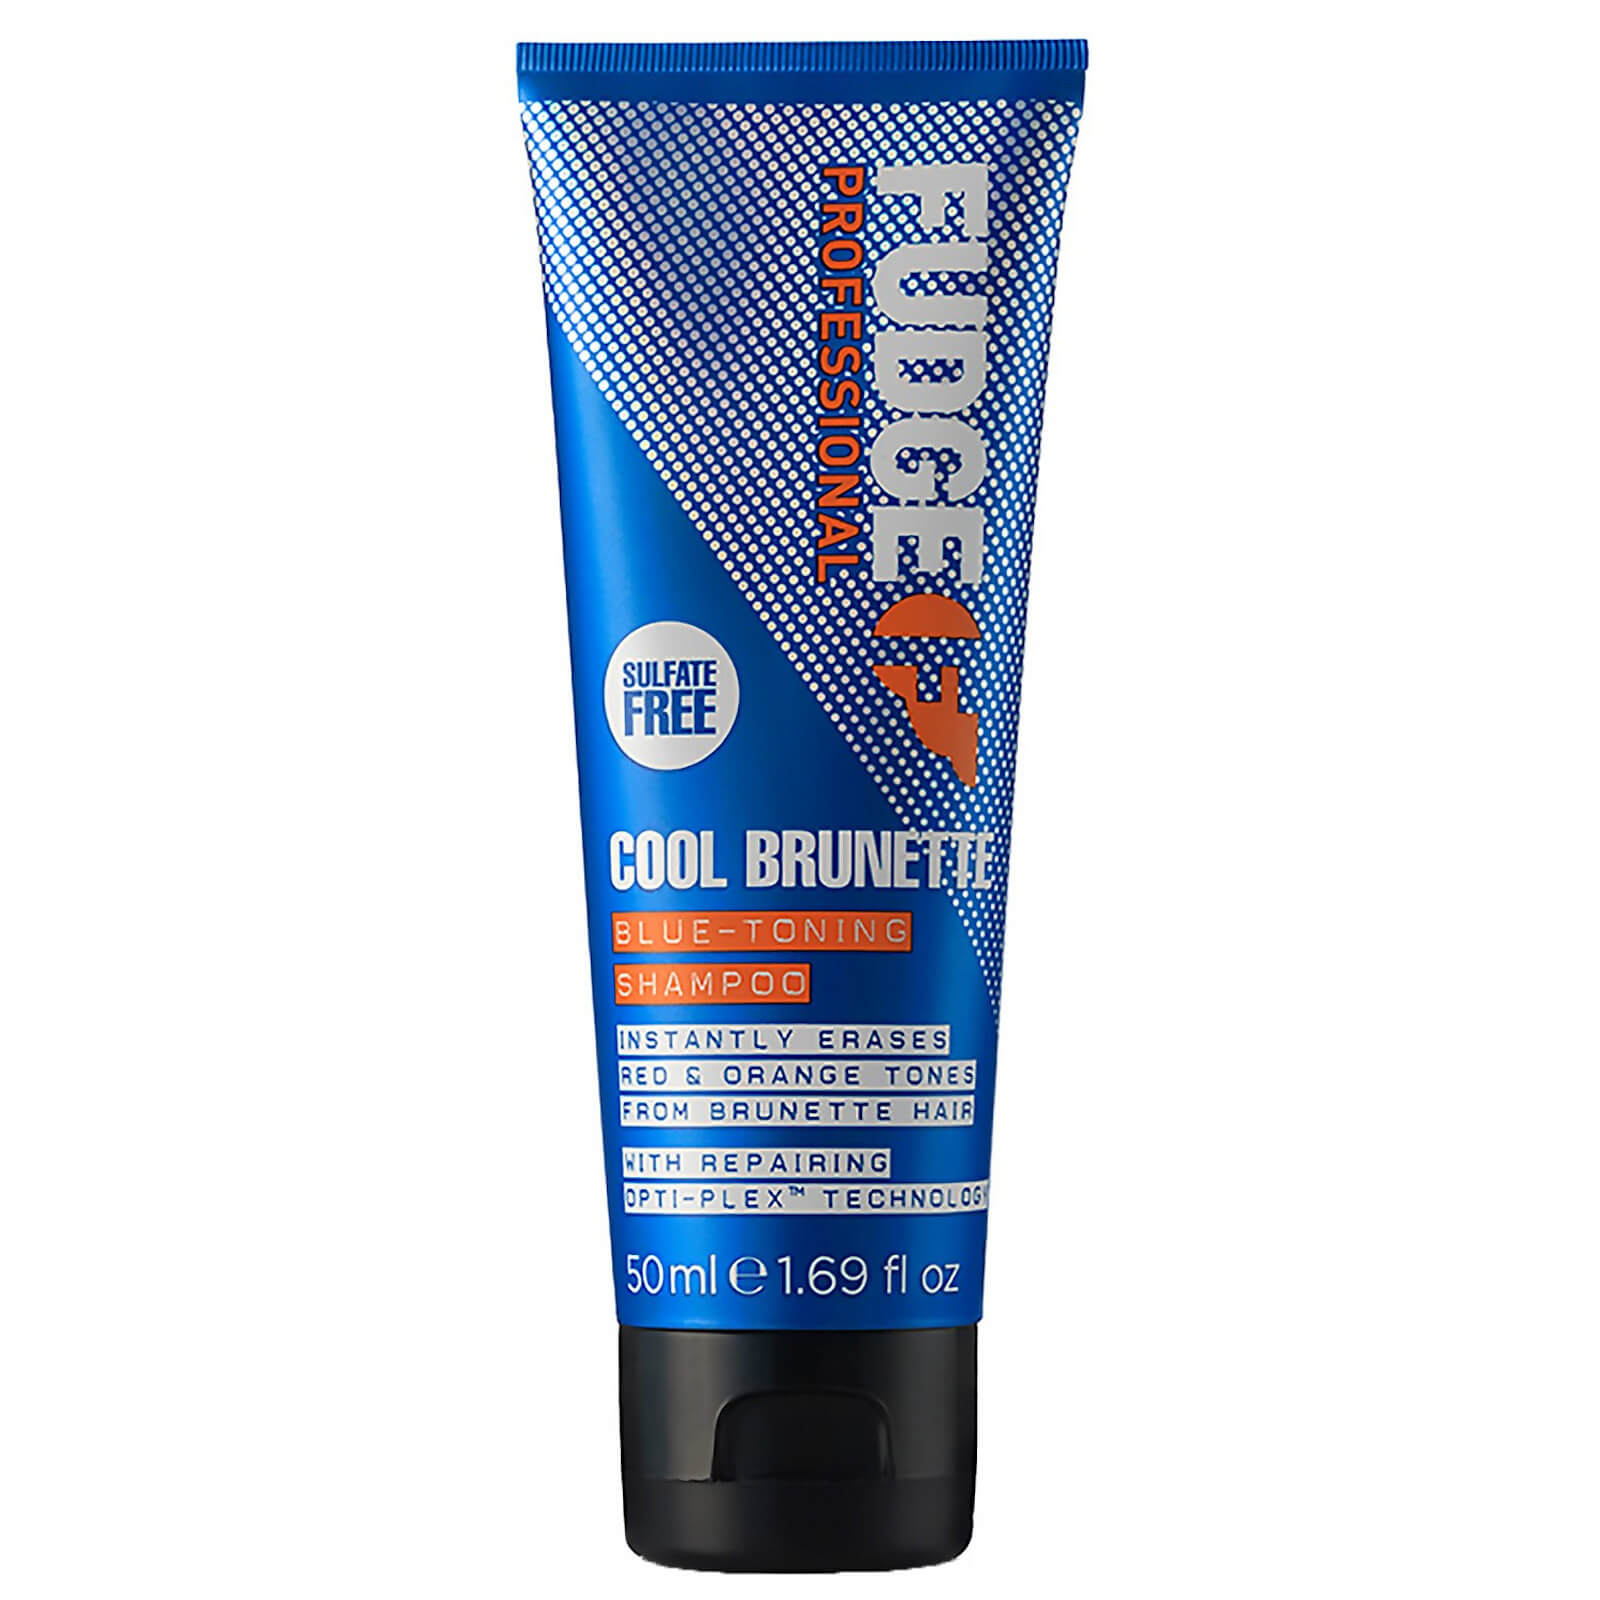 Cool Brunette Blue Toning Shampoo 50ml (Travel Size)